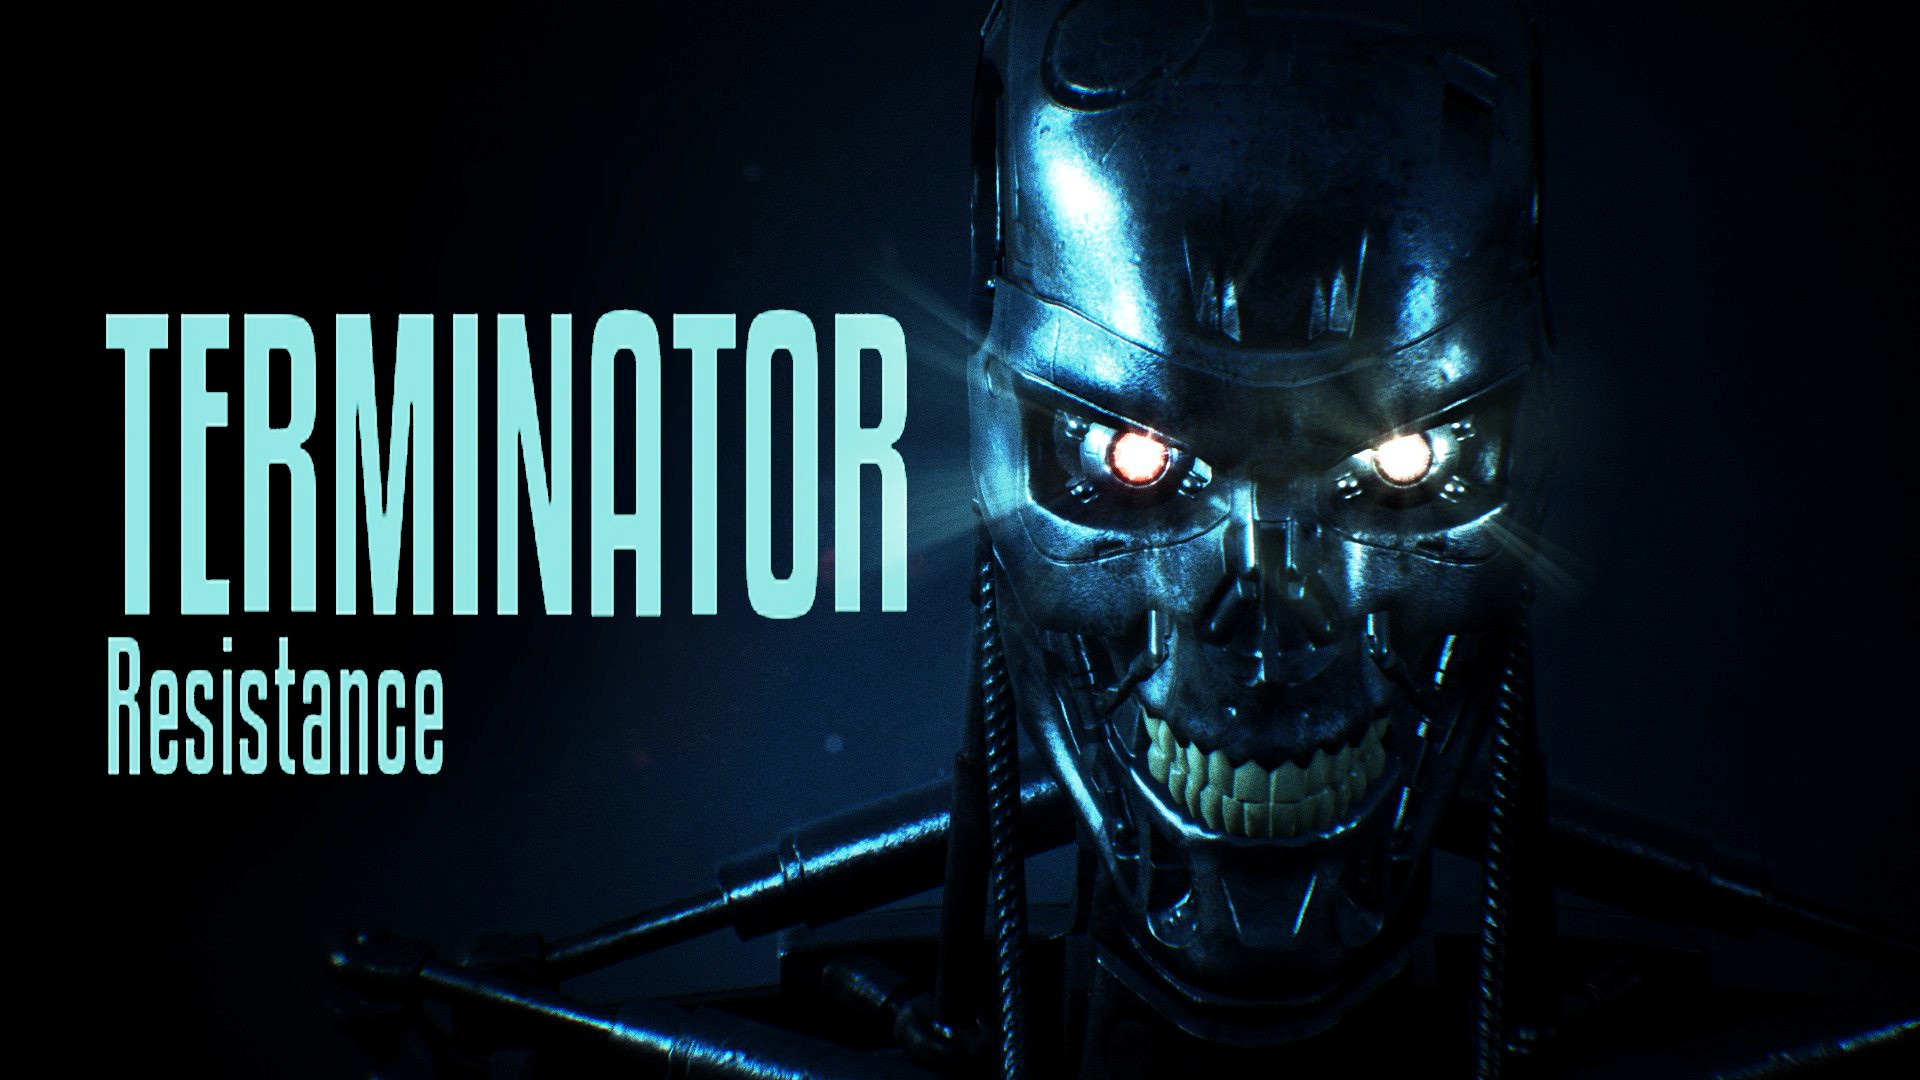 Terminator annihilation line